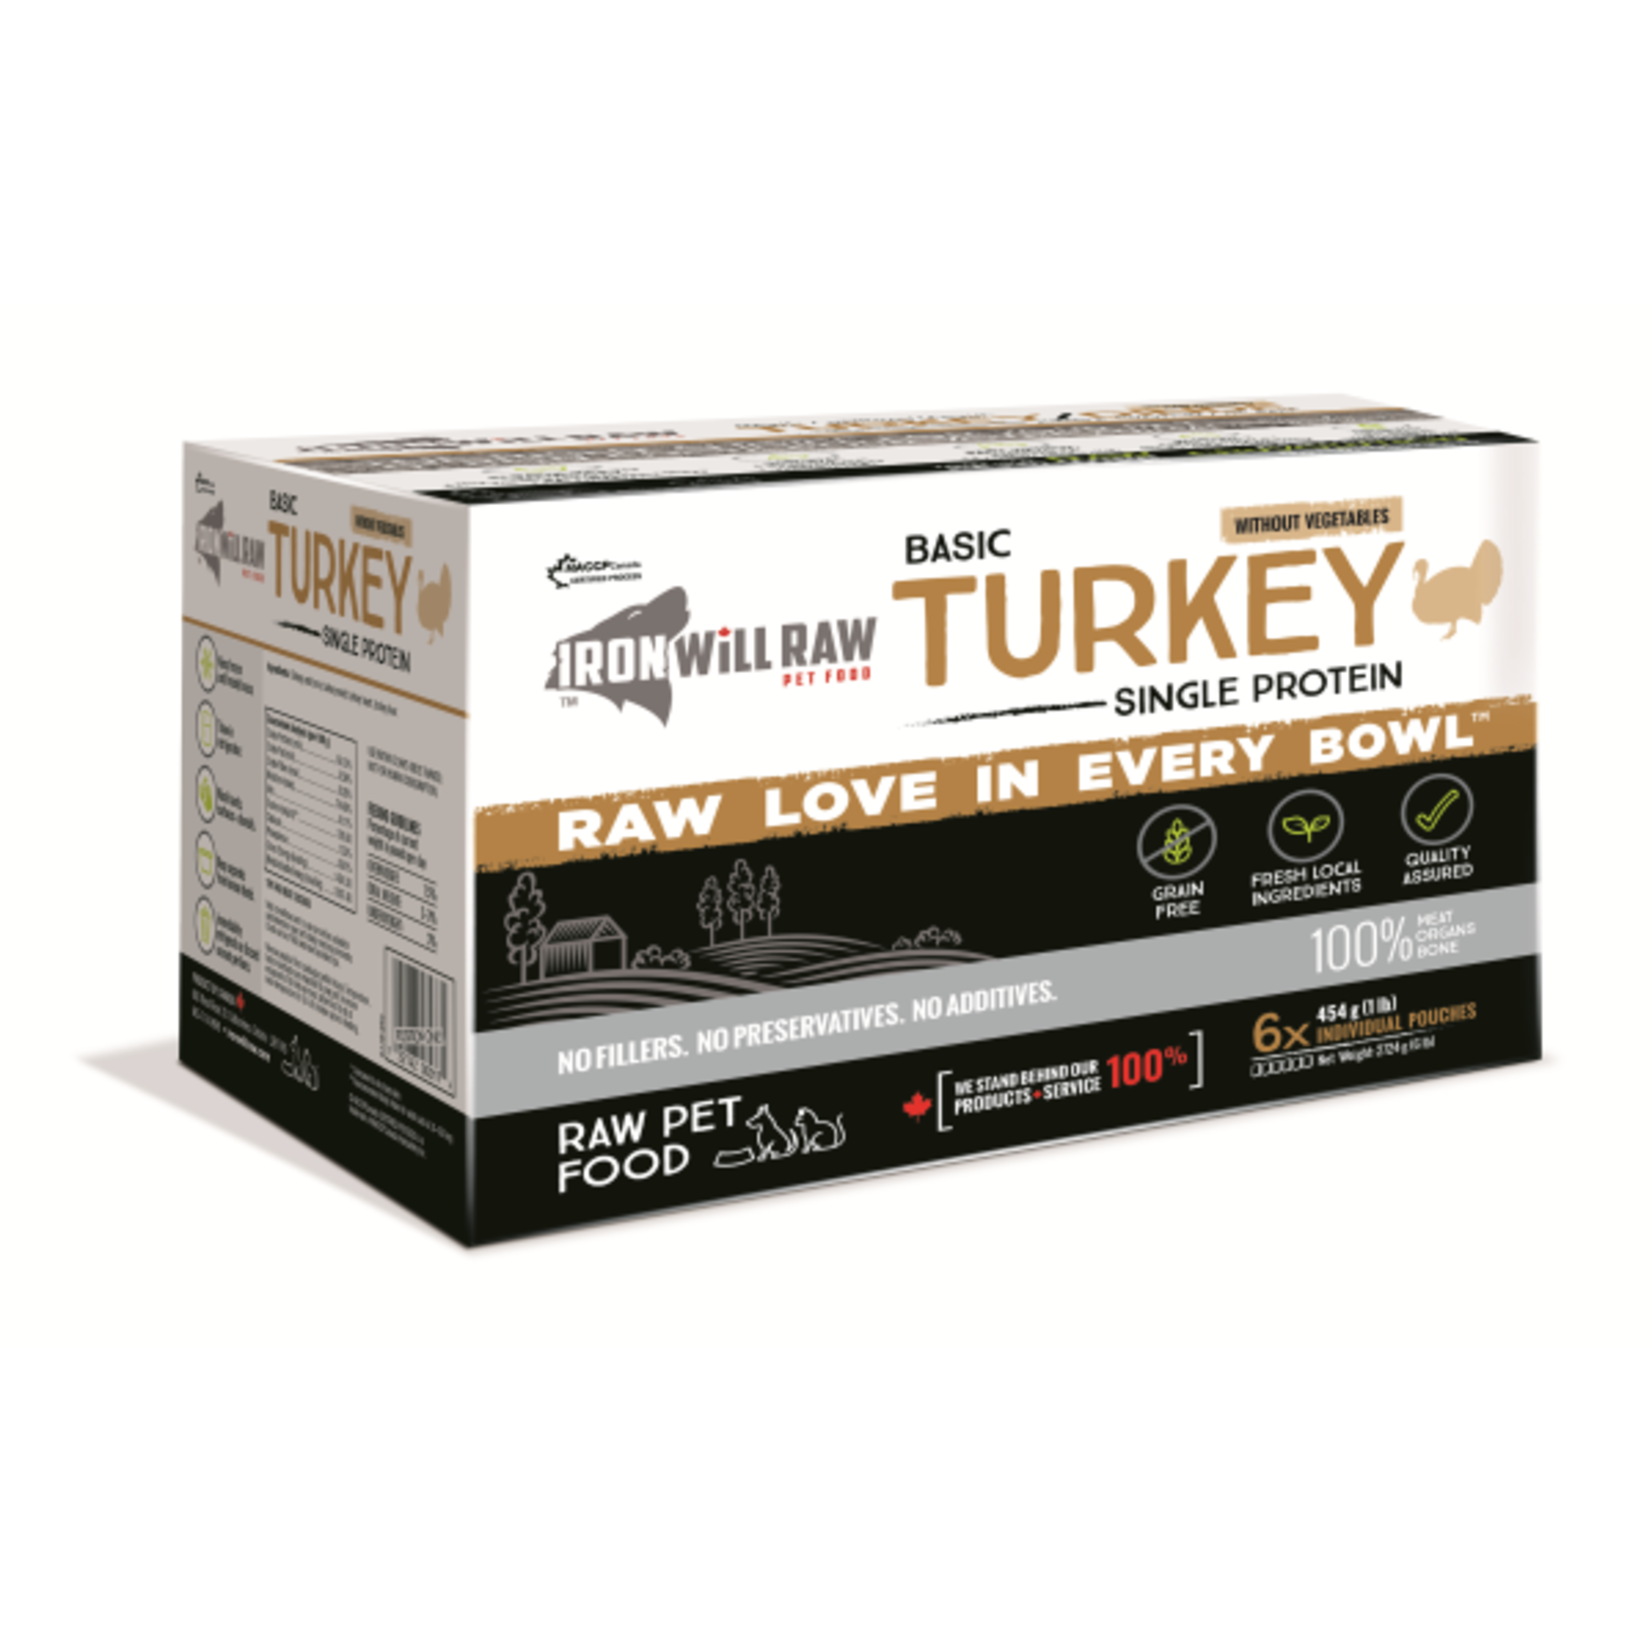 IRON WILL RAW Iron Will Raw Dog GF Basic Turkey Single Protein 6/1 lb